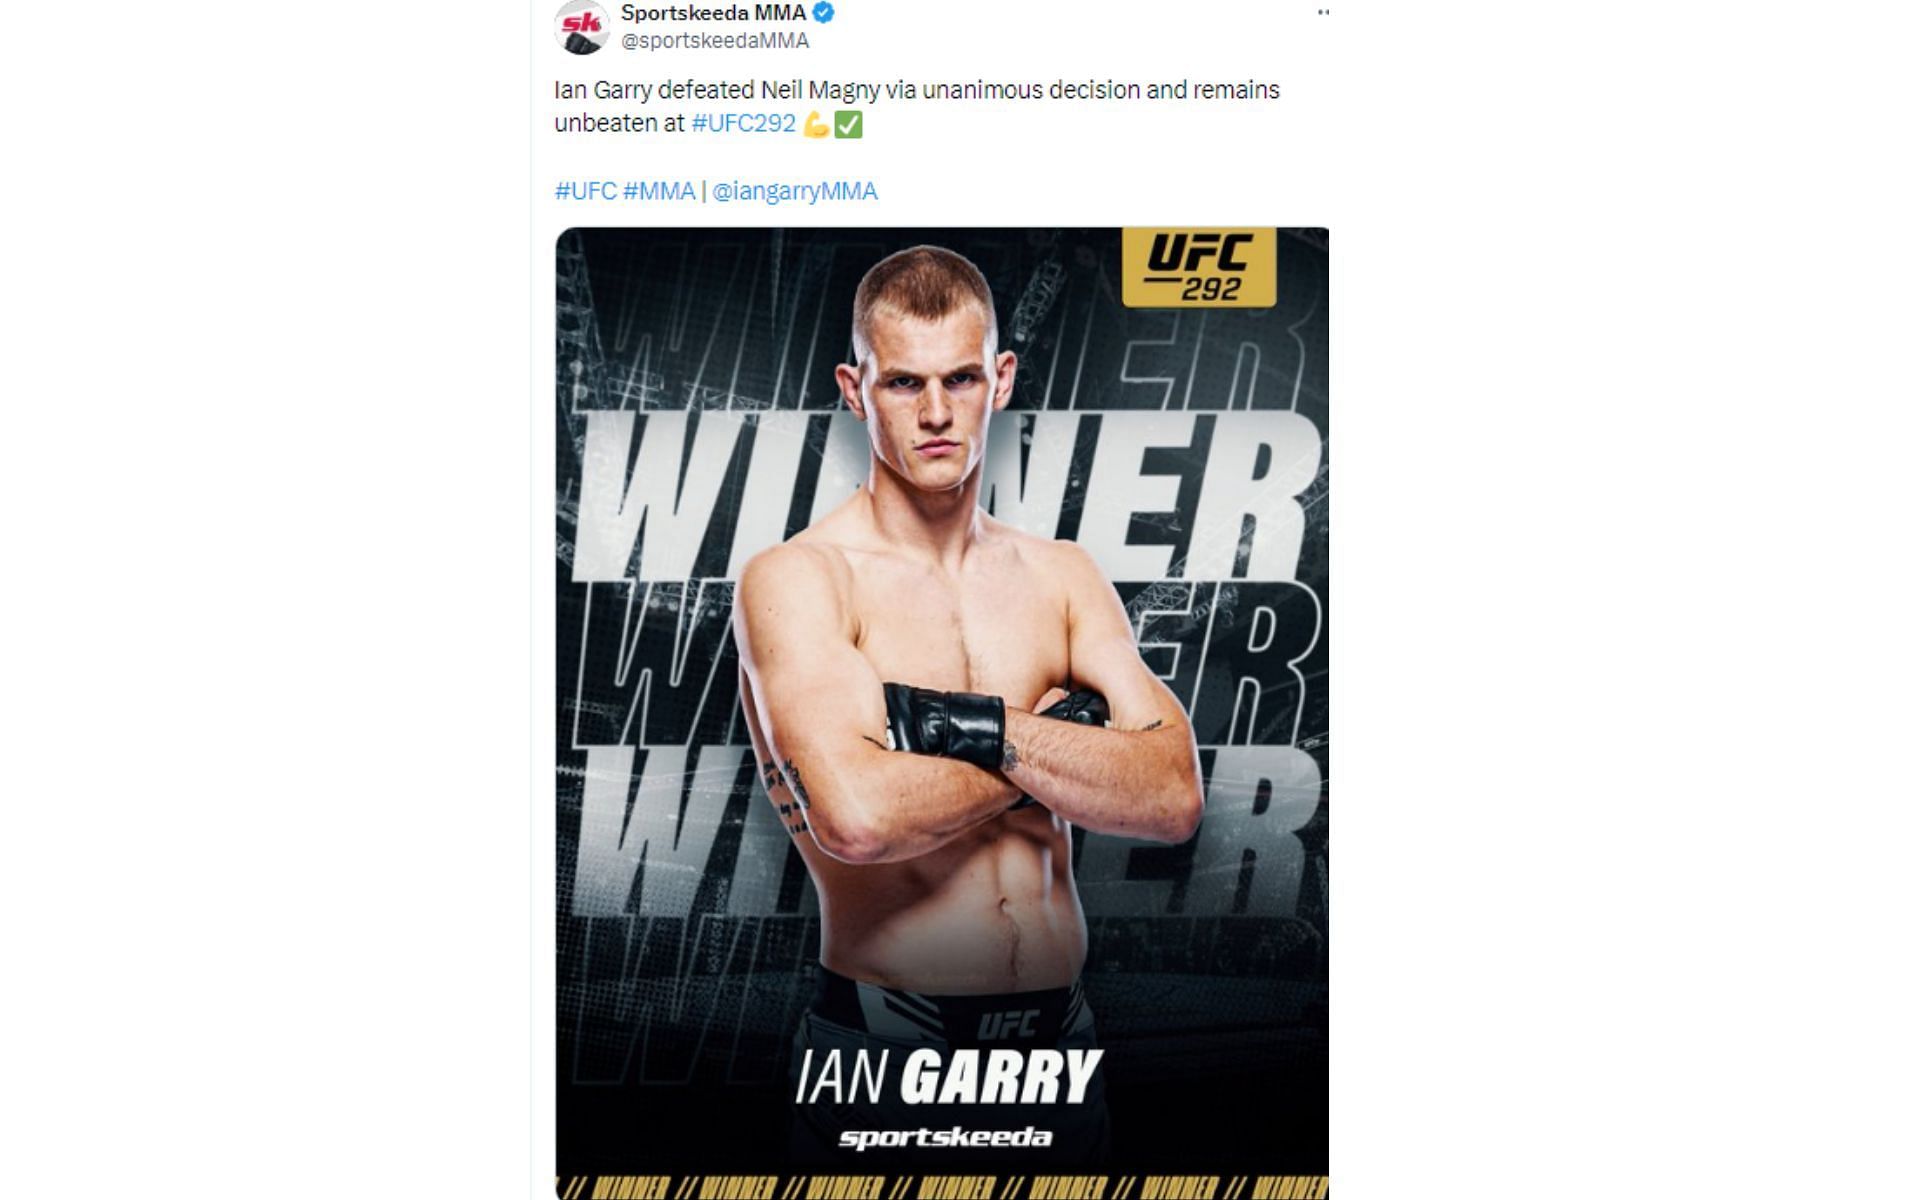 Tweet regarding Garry vs. Magny [Image courtesy: @sportskeedaMMA - X]